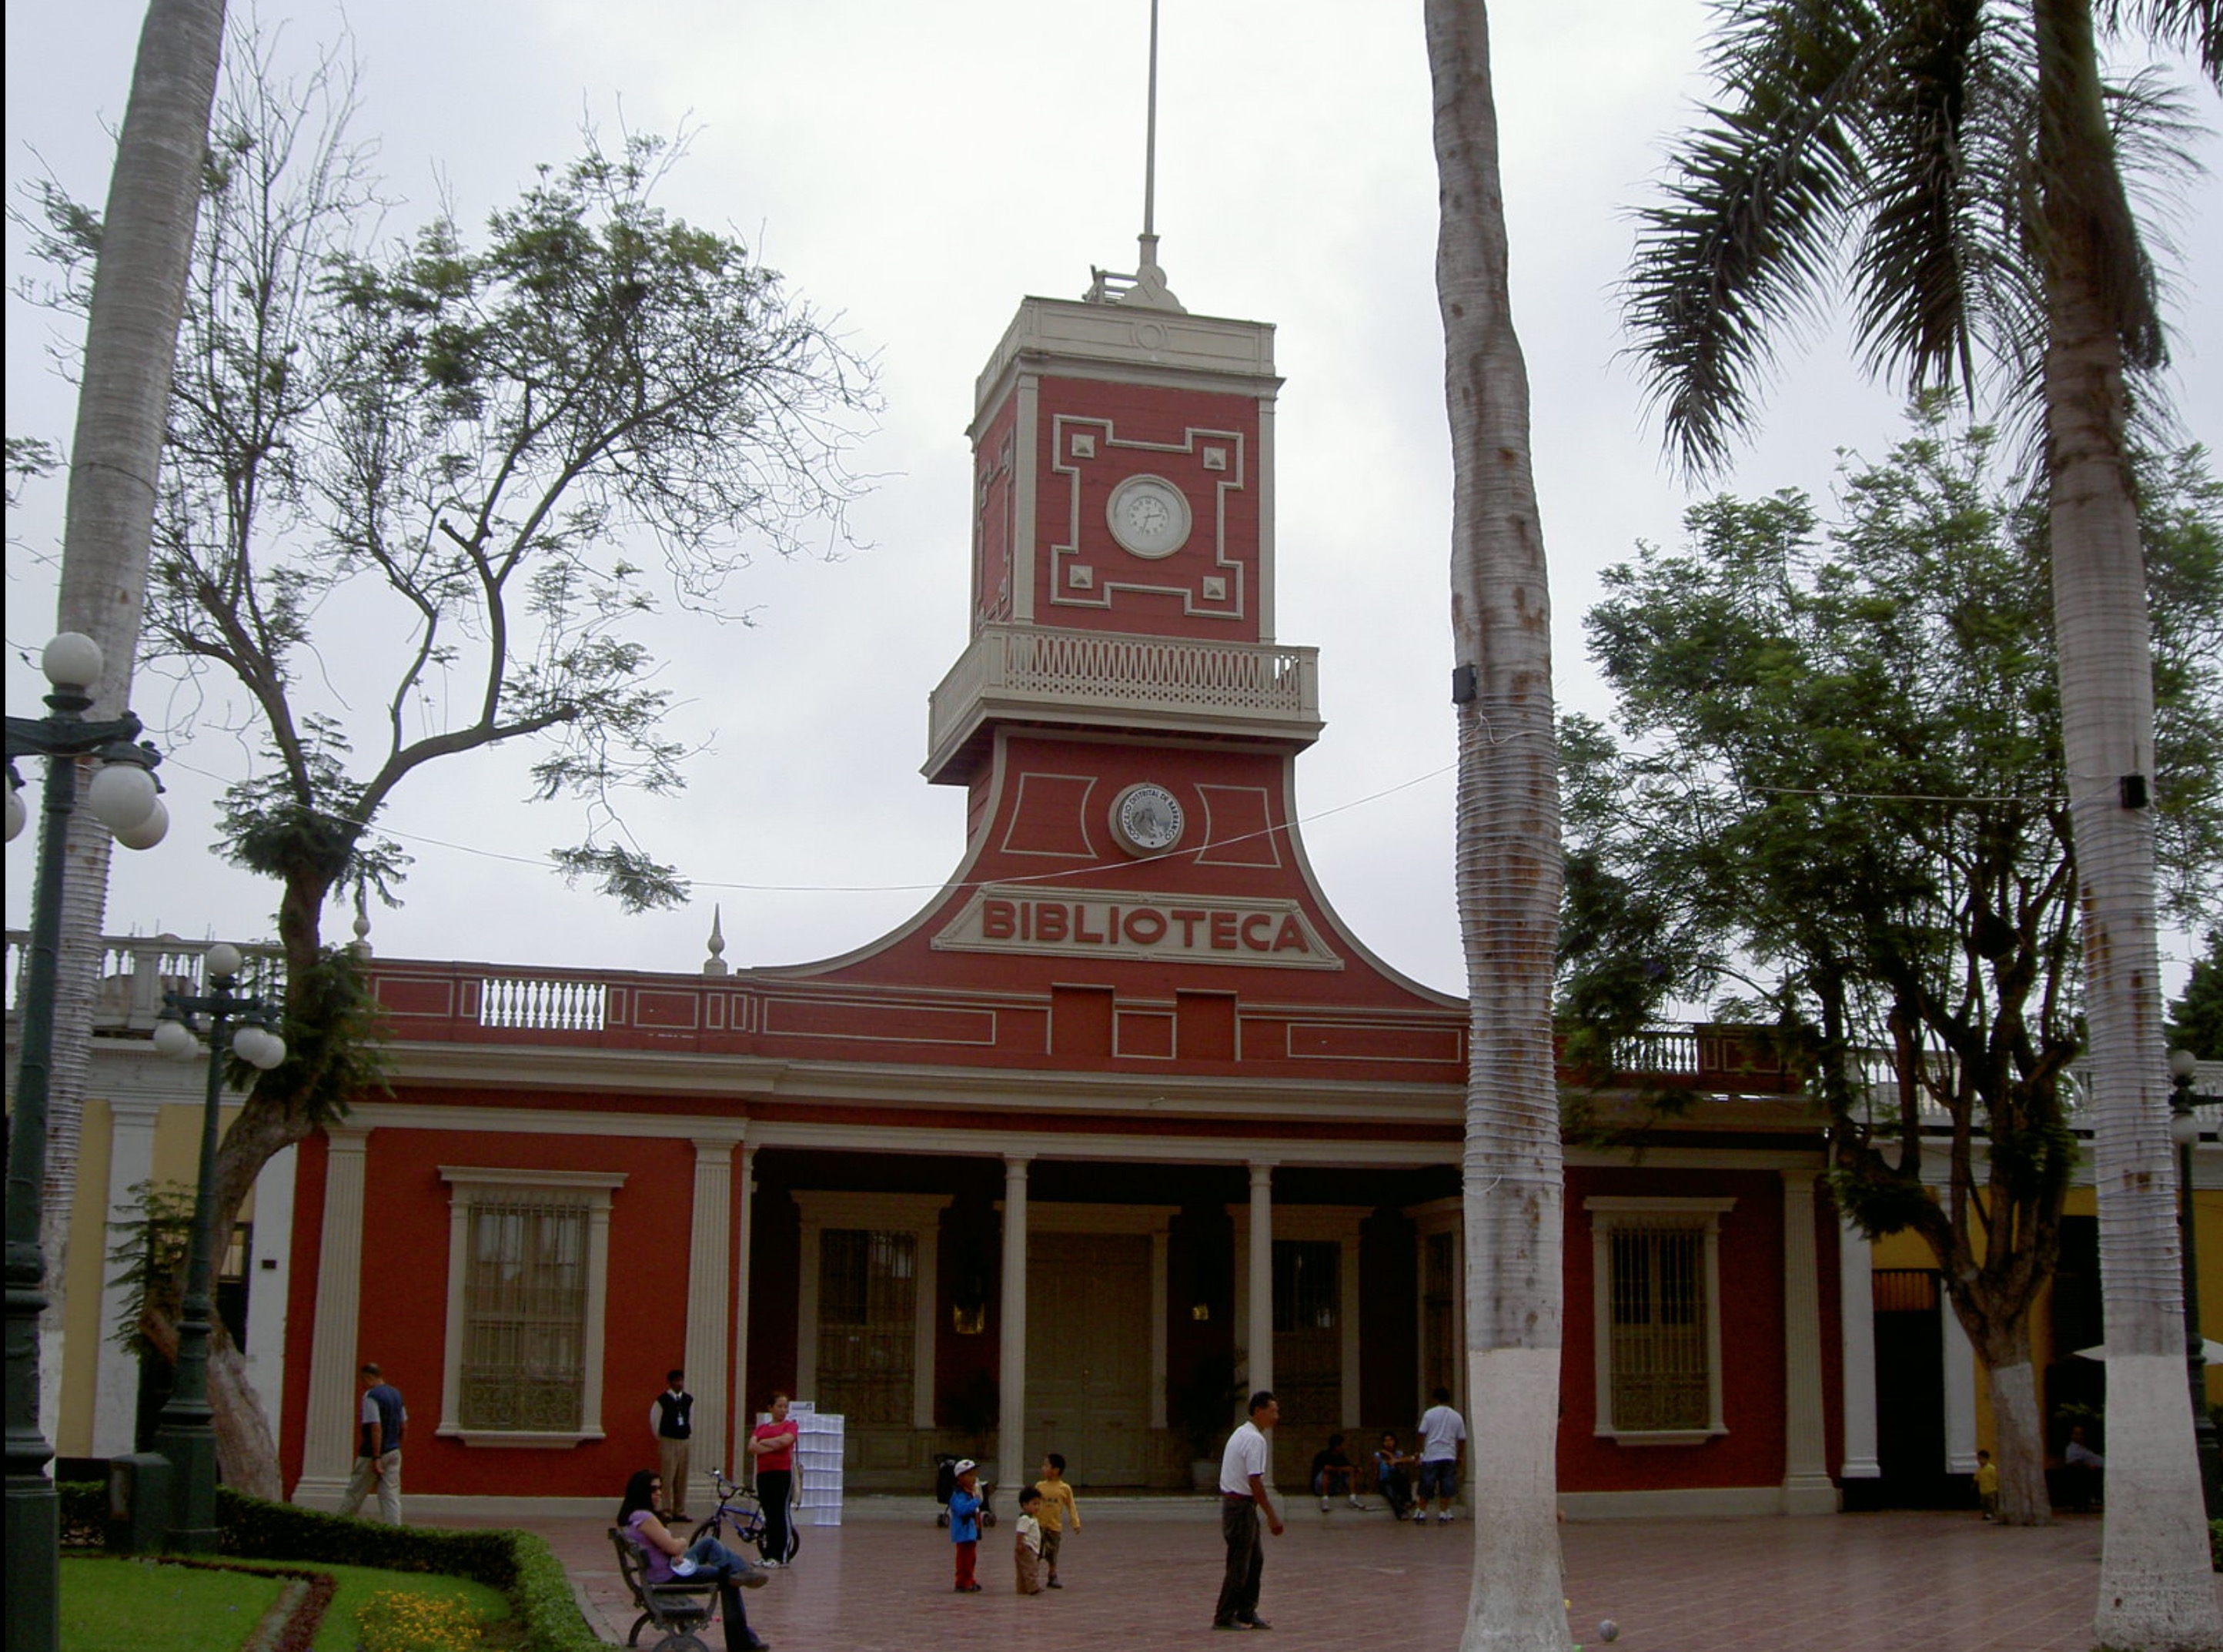 Barranco's town square - photo courtesy Wikimedia Commons